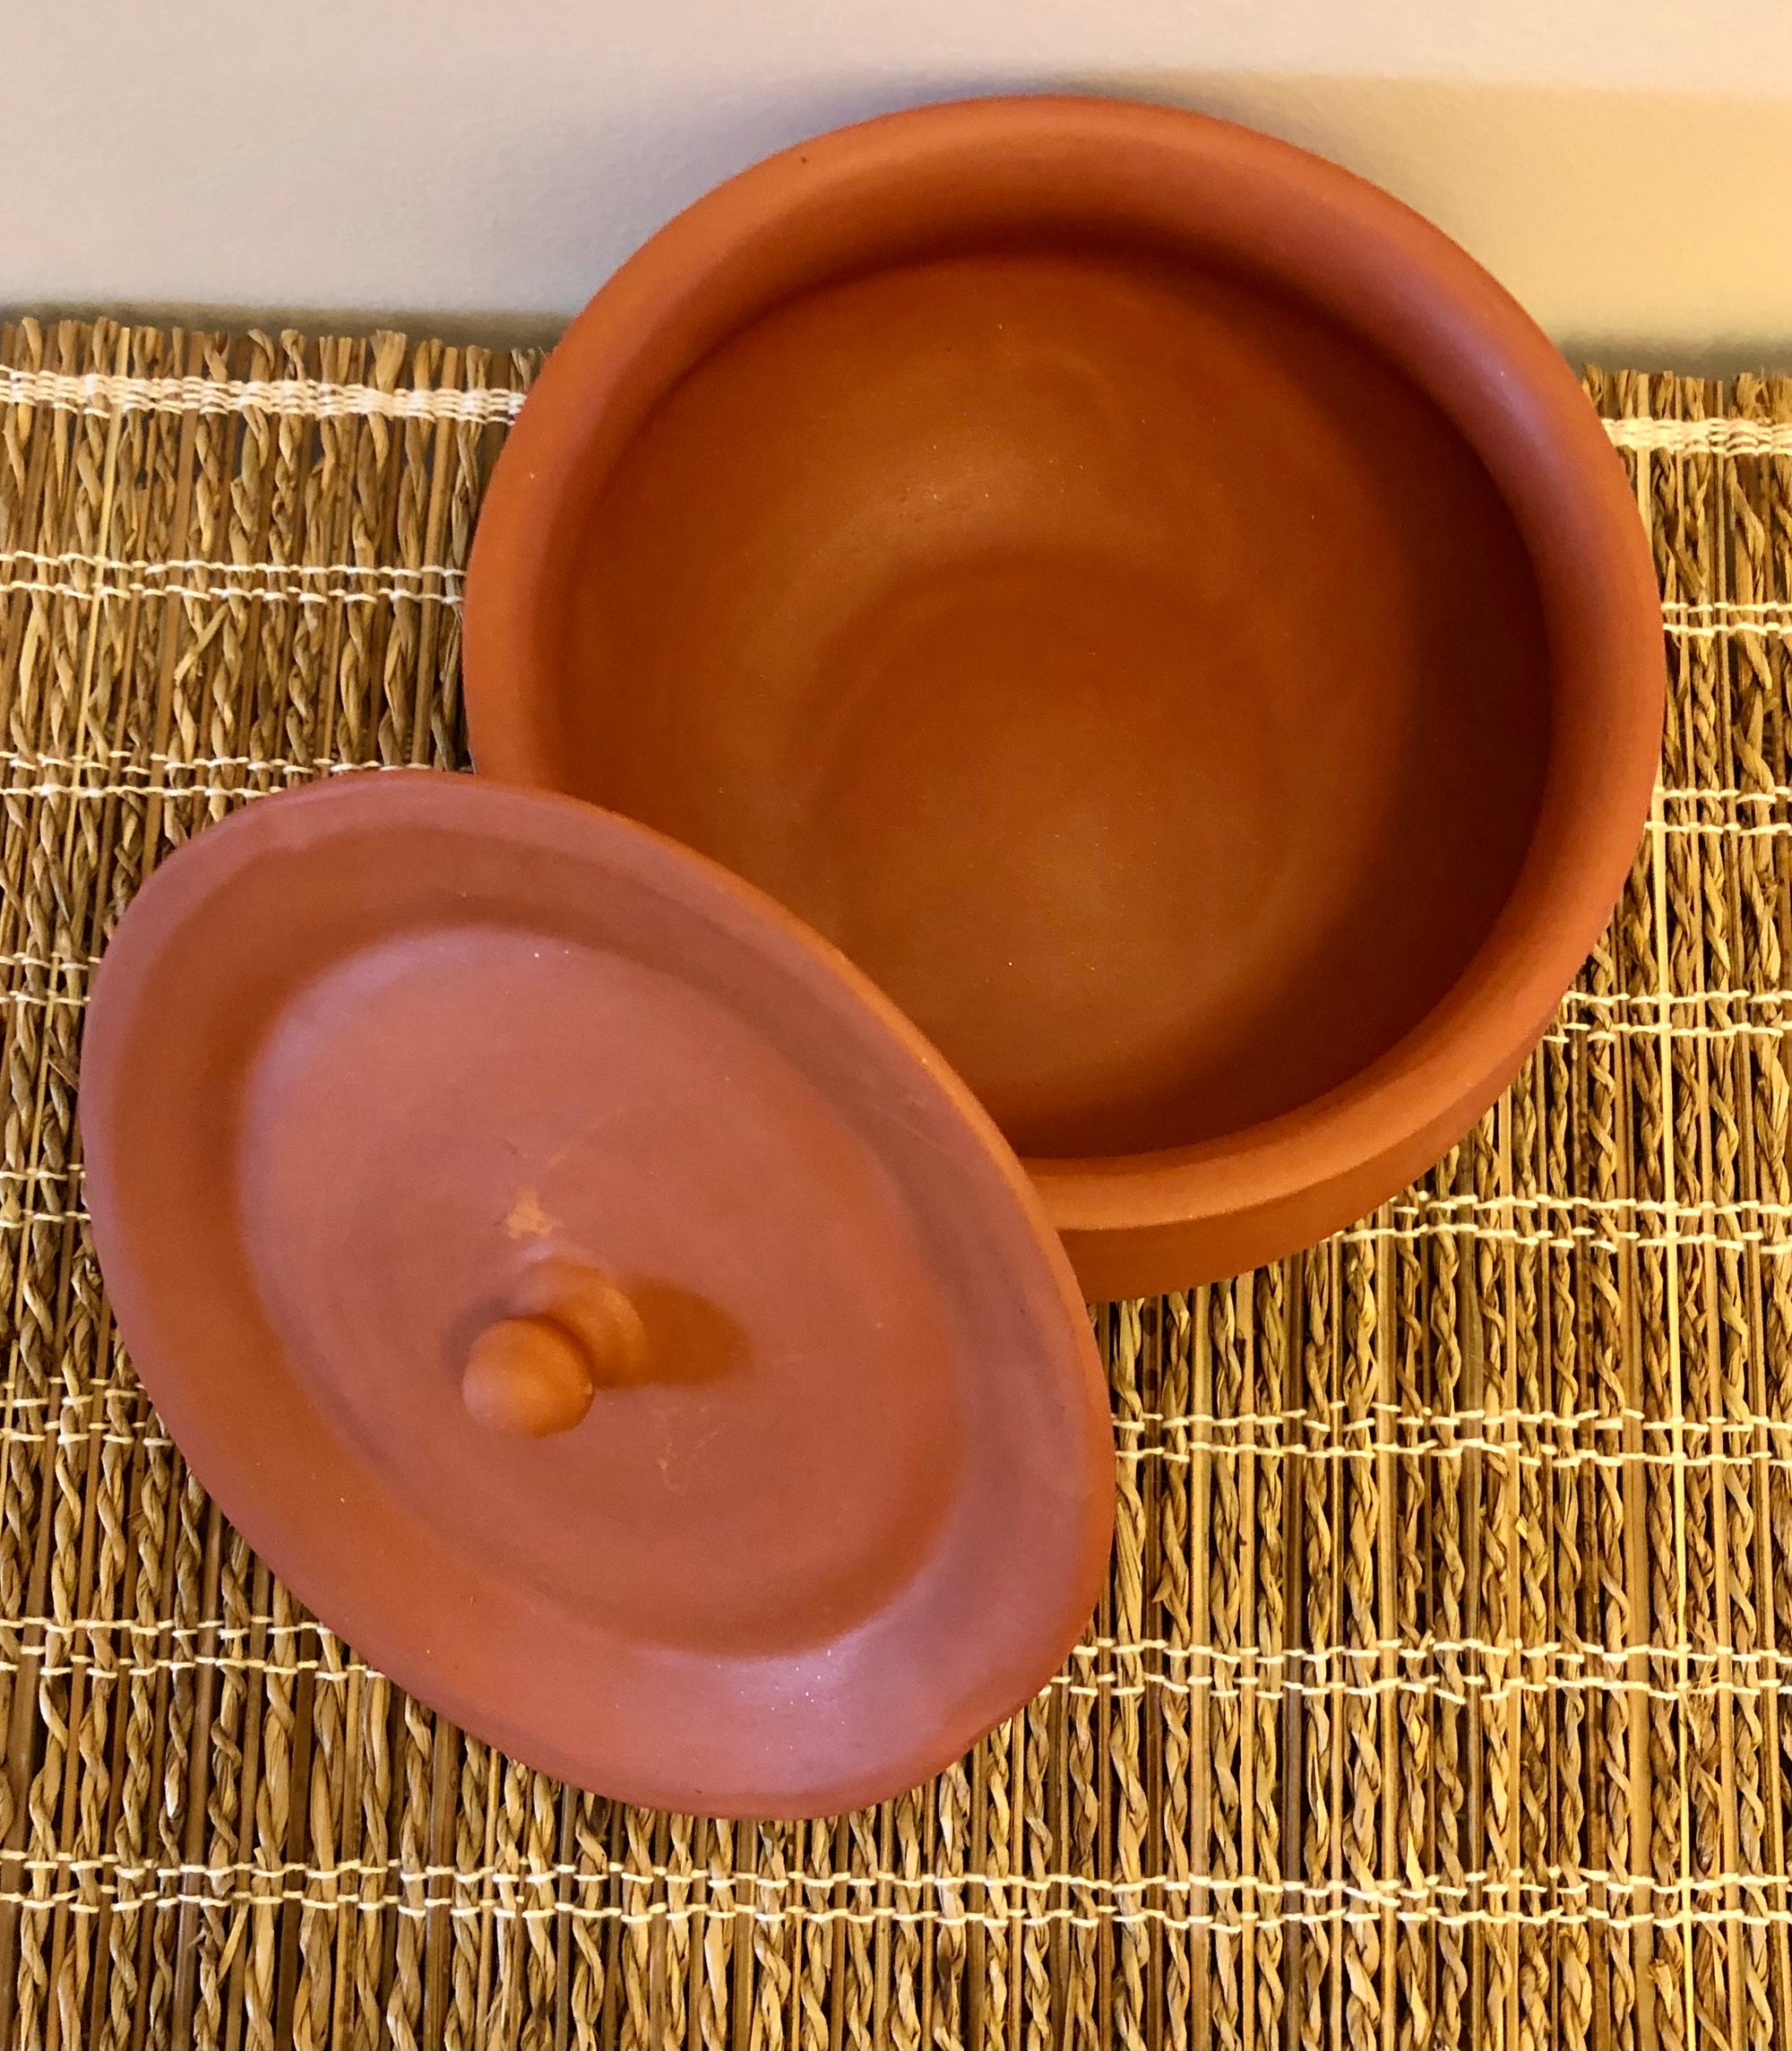 indian clay pot cookware